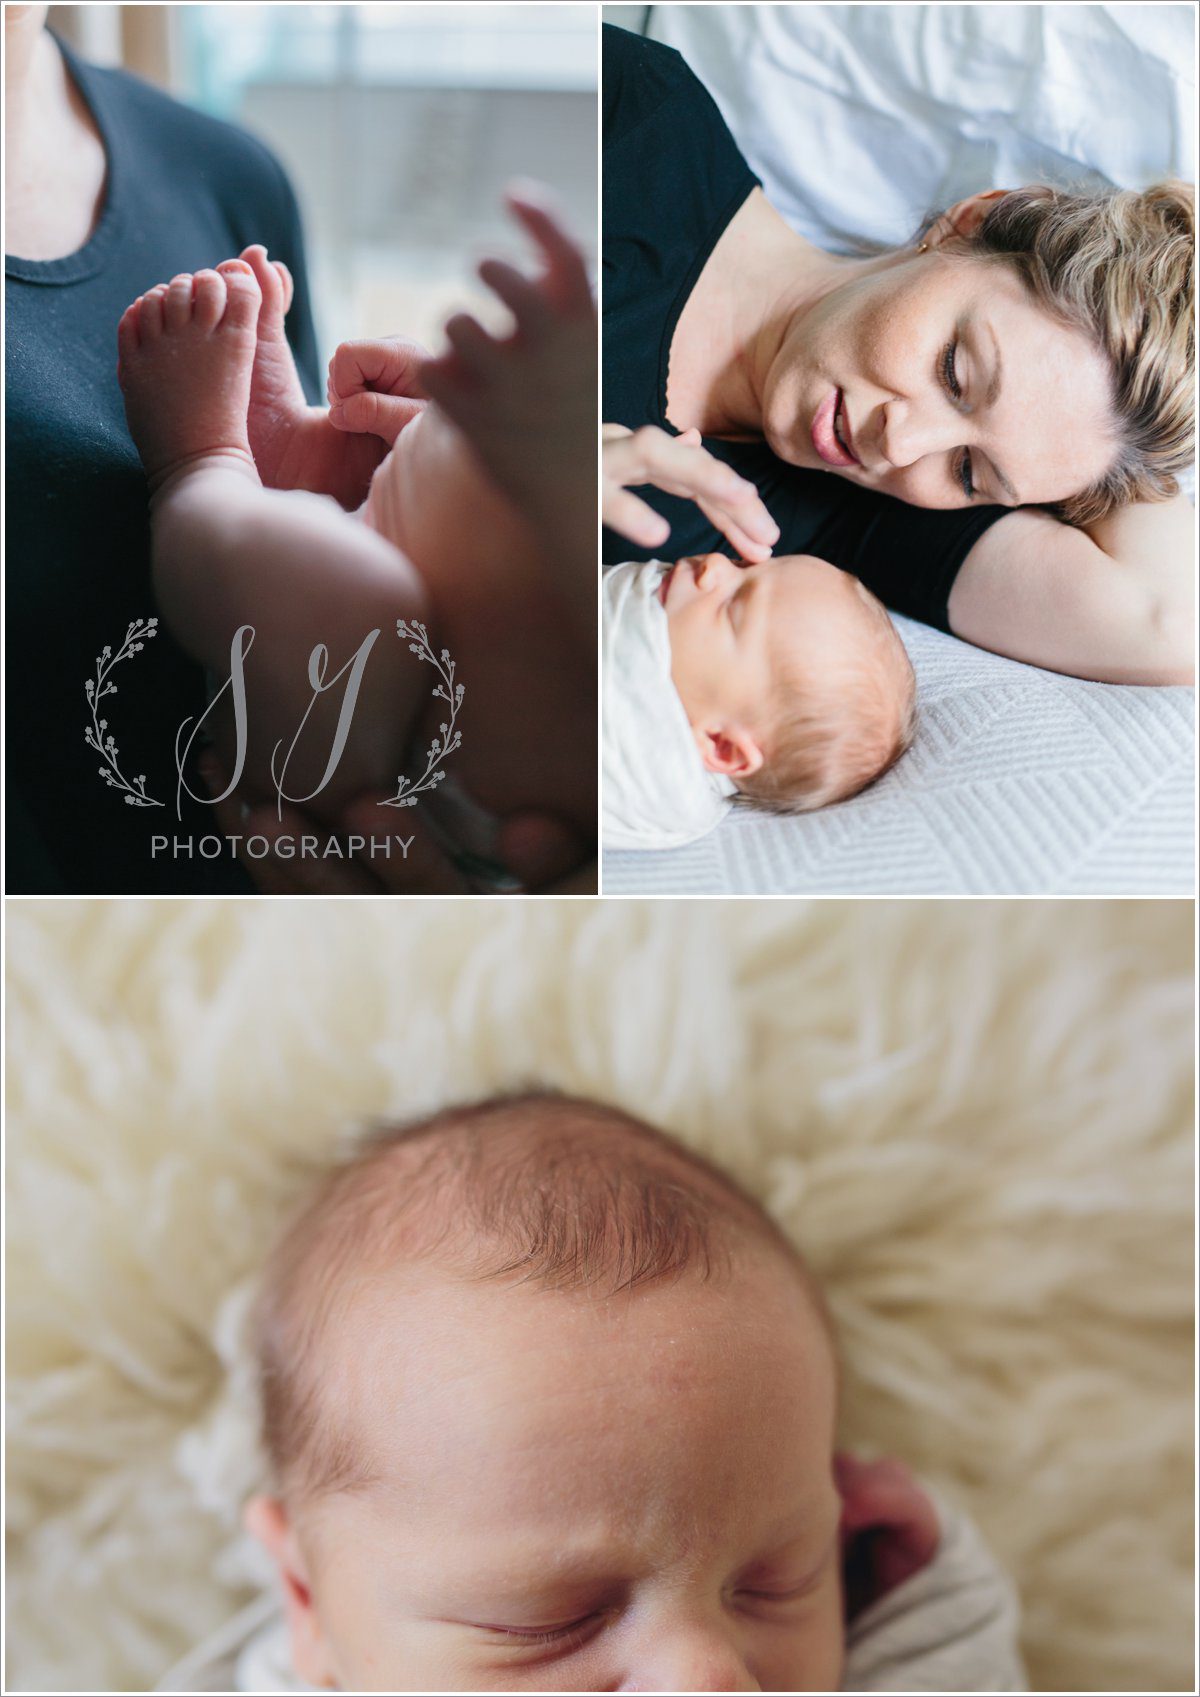 Sarah Gray Photography, Tallahassee FL newborn family phographer